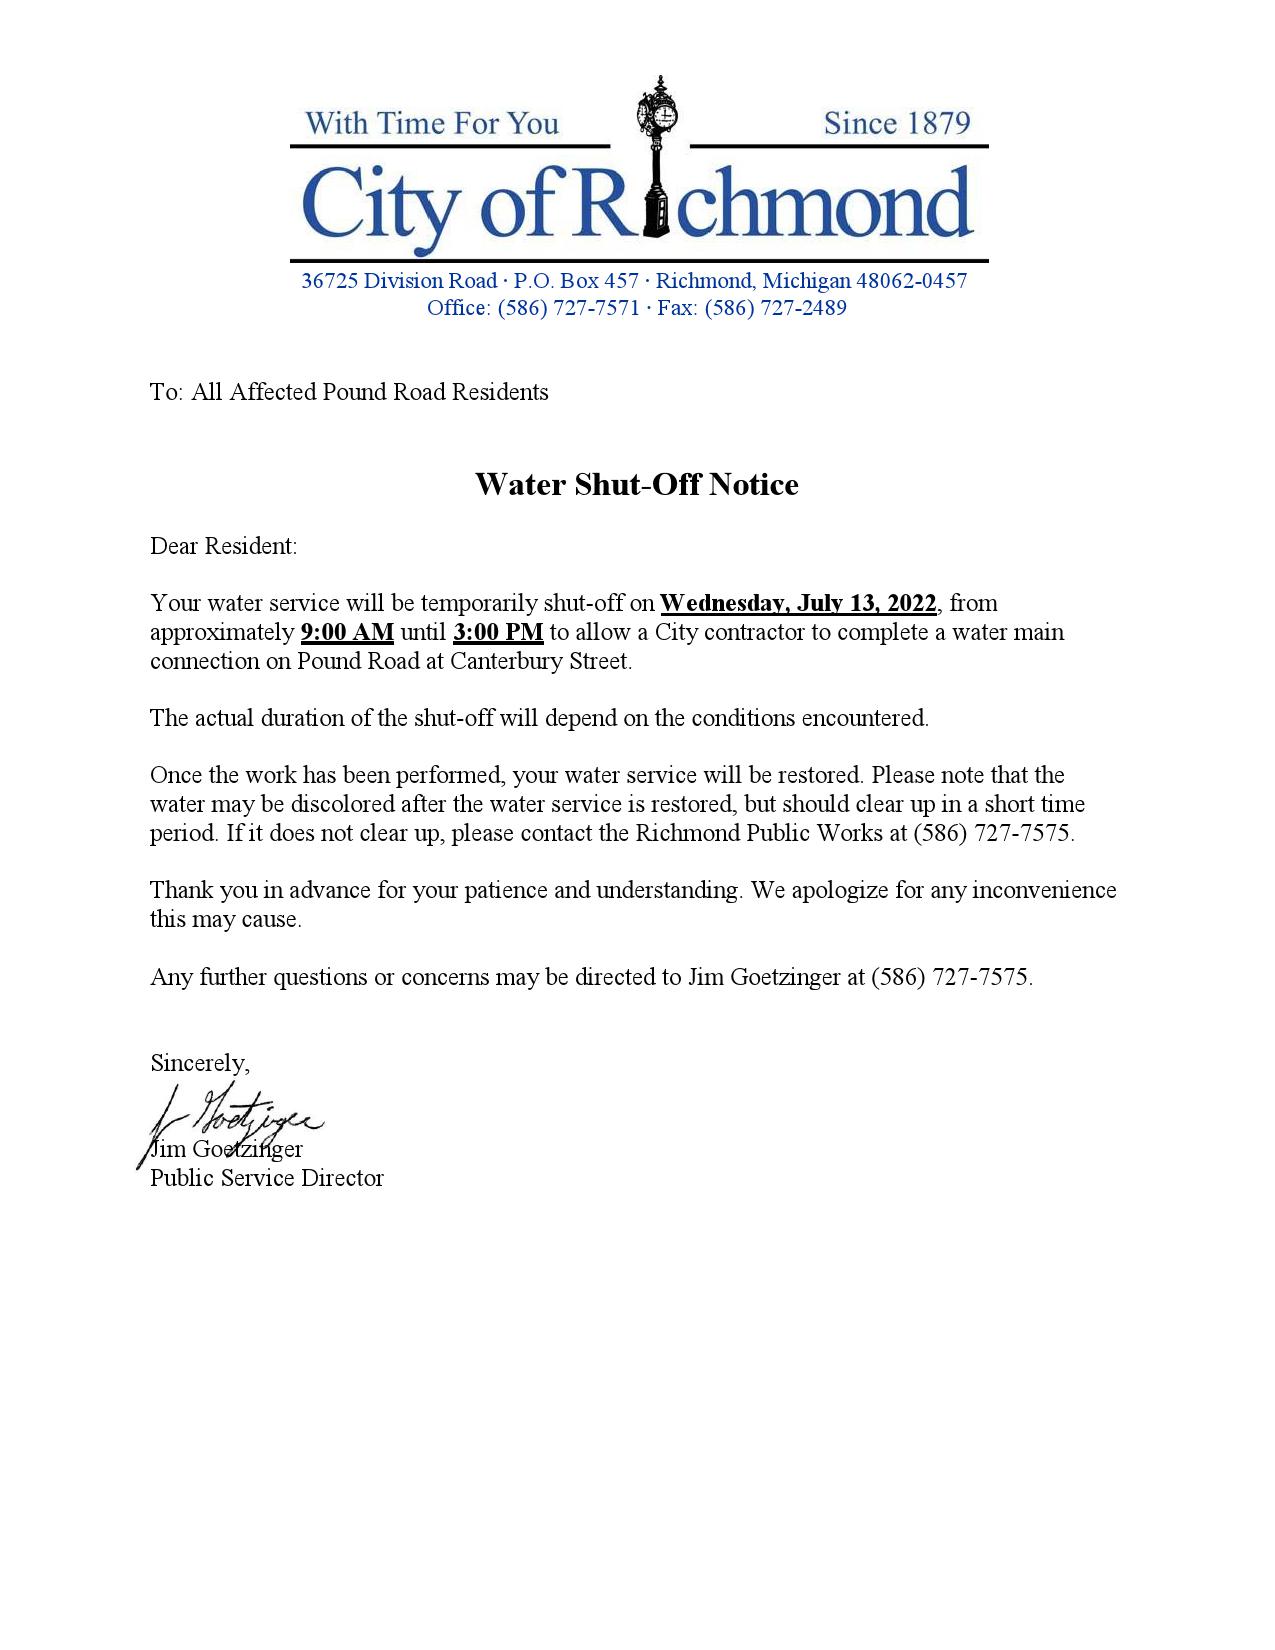 USA Michigan City of Richmond water utility bill shutoff notice, Word and PDF template